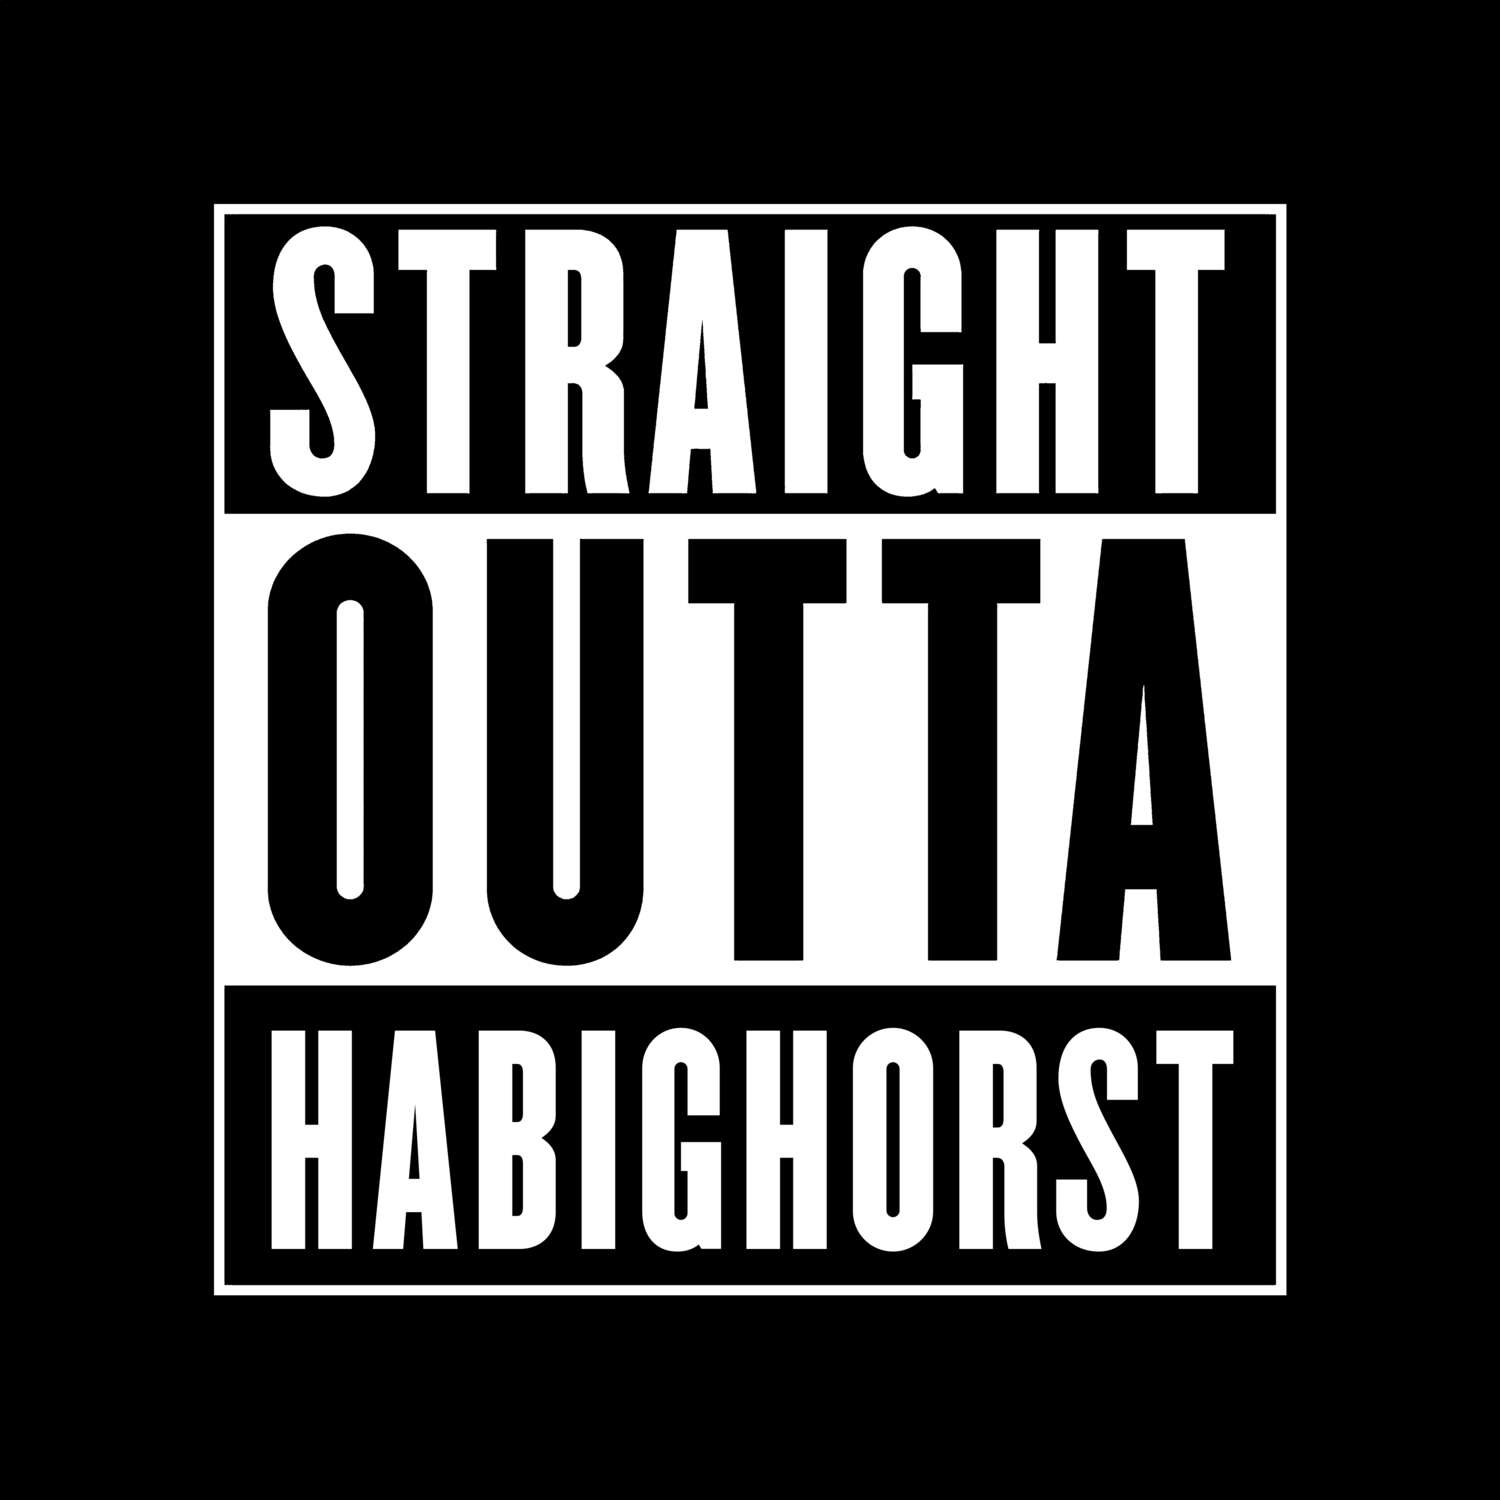 Habighorst T-Shirt »Straight Outta«